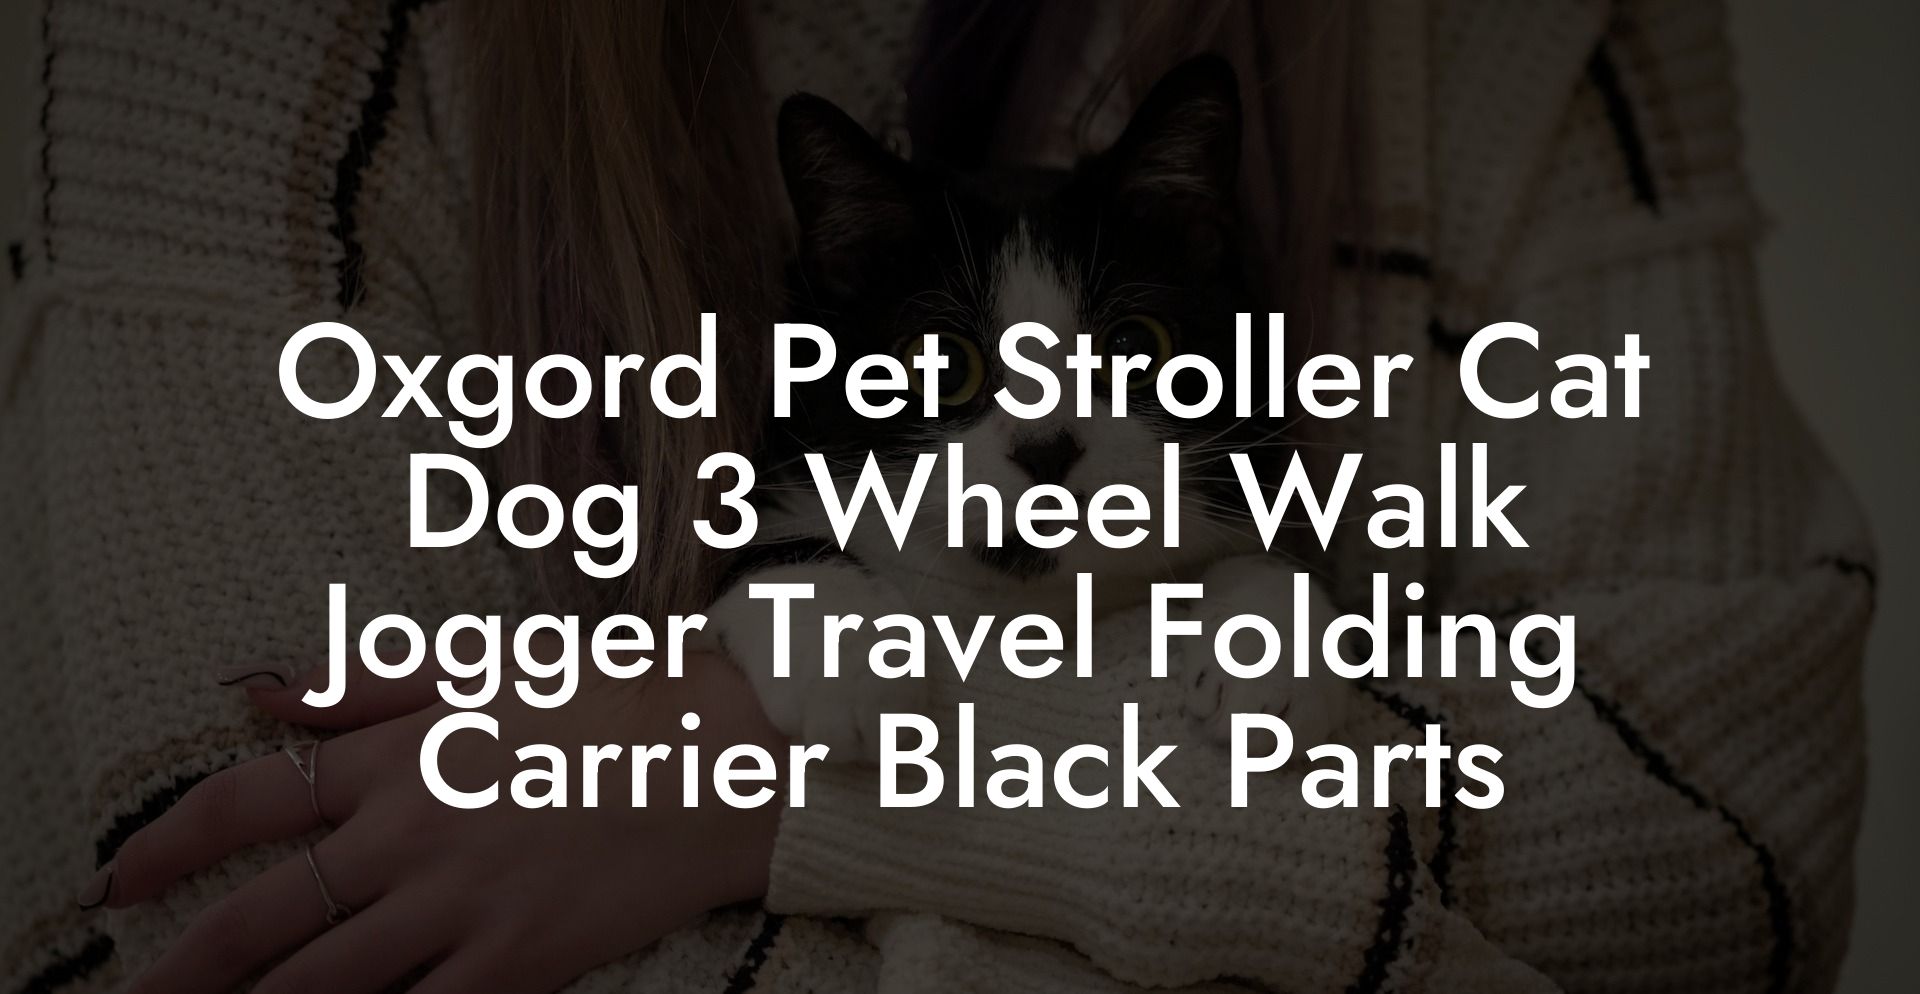 Oxgord Pet Stroller Cat Dog 3 Wheel Walk Jogger Travel Folding Carrier Black Parts